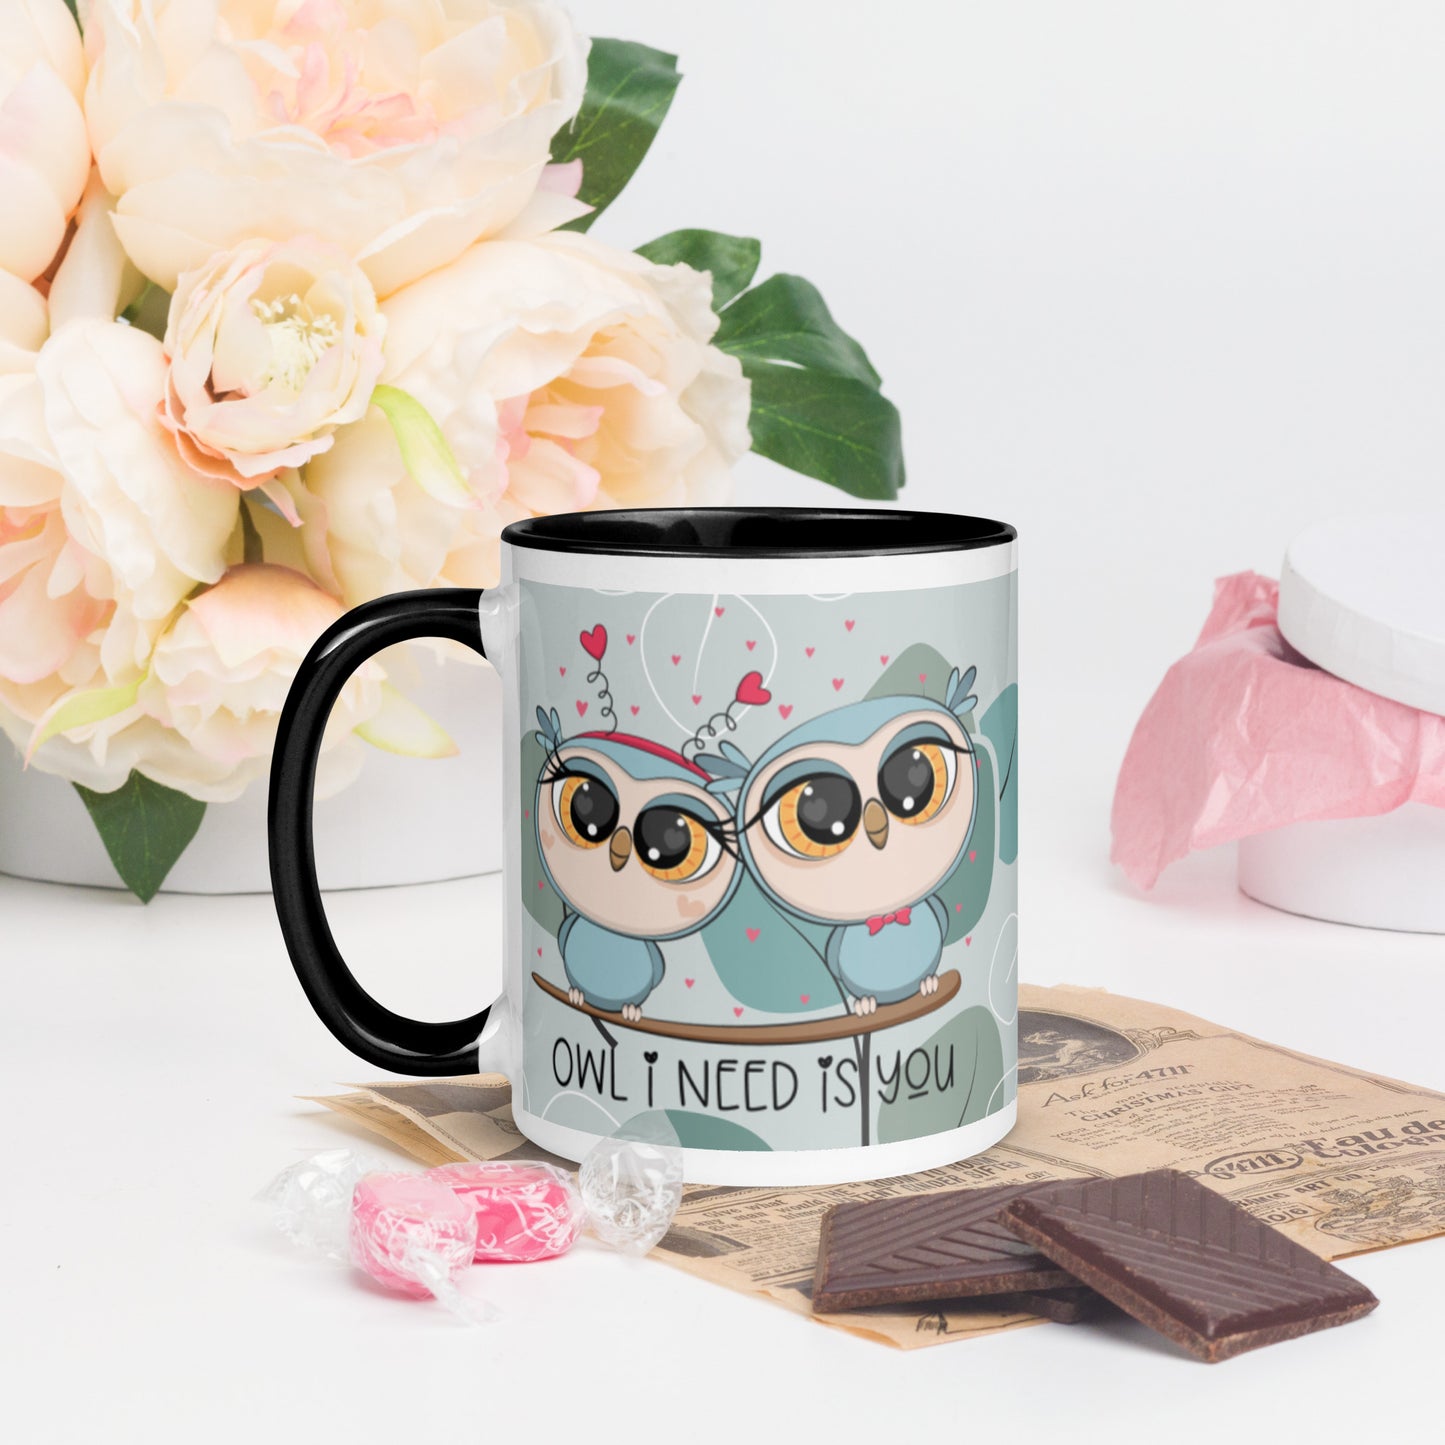 OWL I NEED IS YOU- Mug with Color Inside